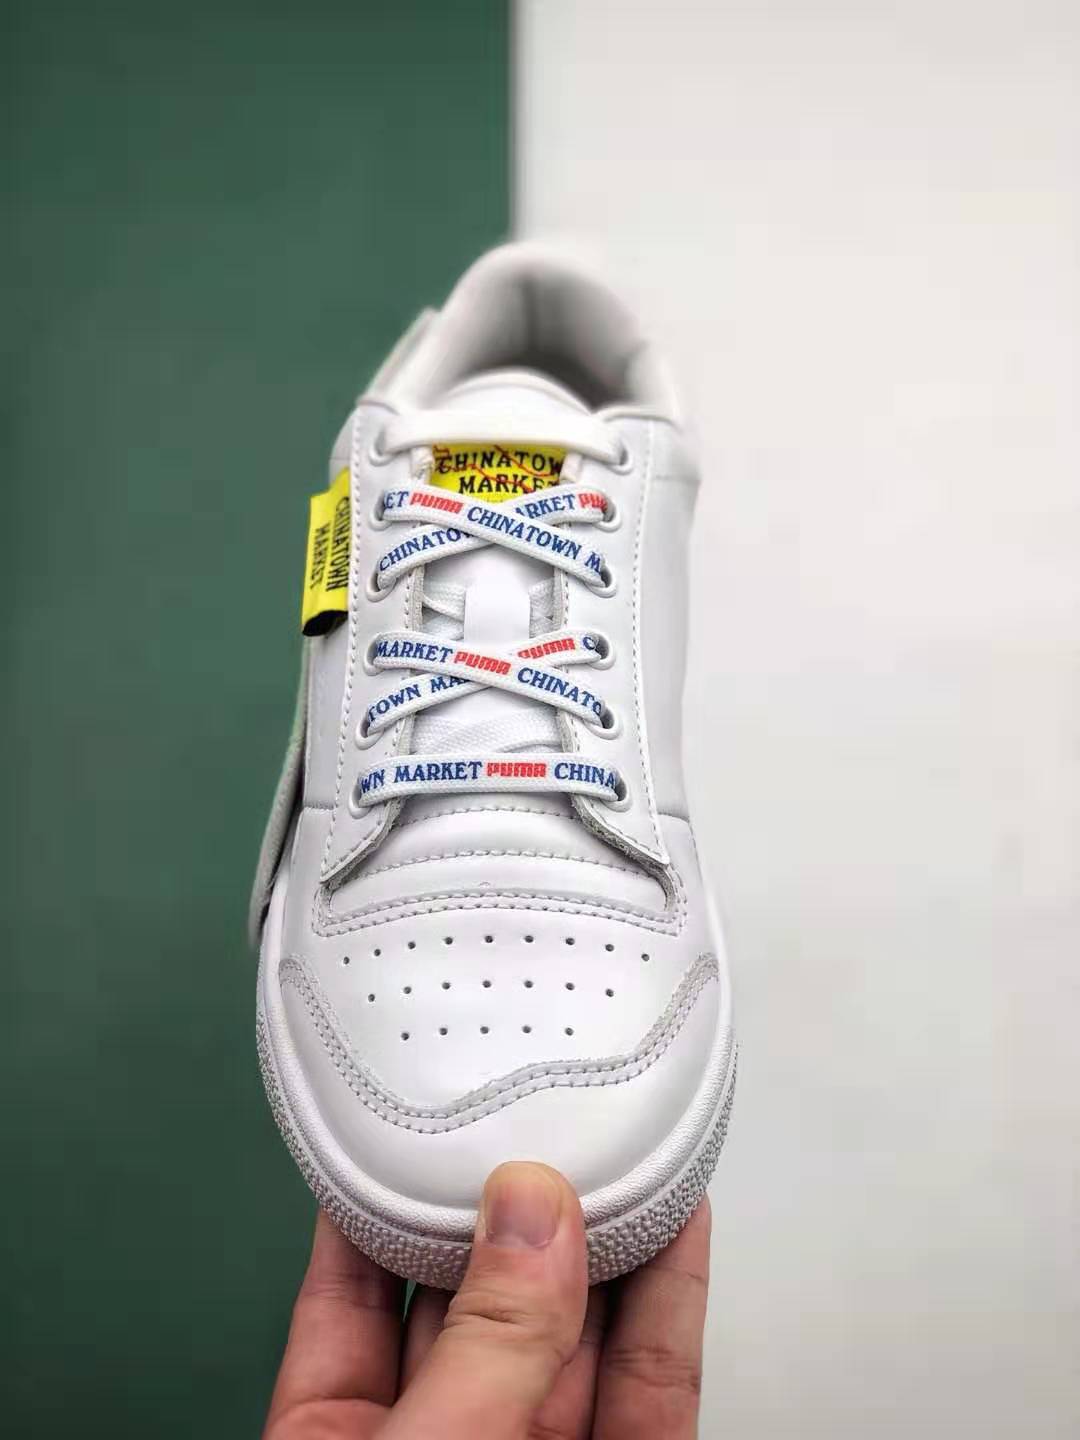 PUMA Chinatown Market x Ralph Sampson Low 'White' 371089-01 - Stylish Collaboration Sneaker